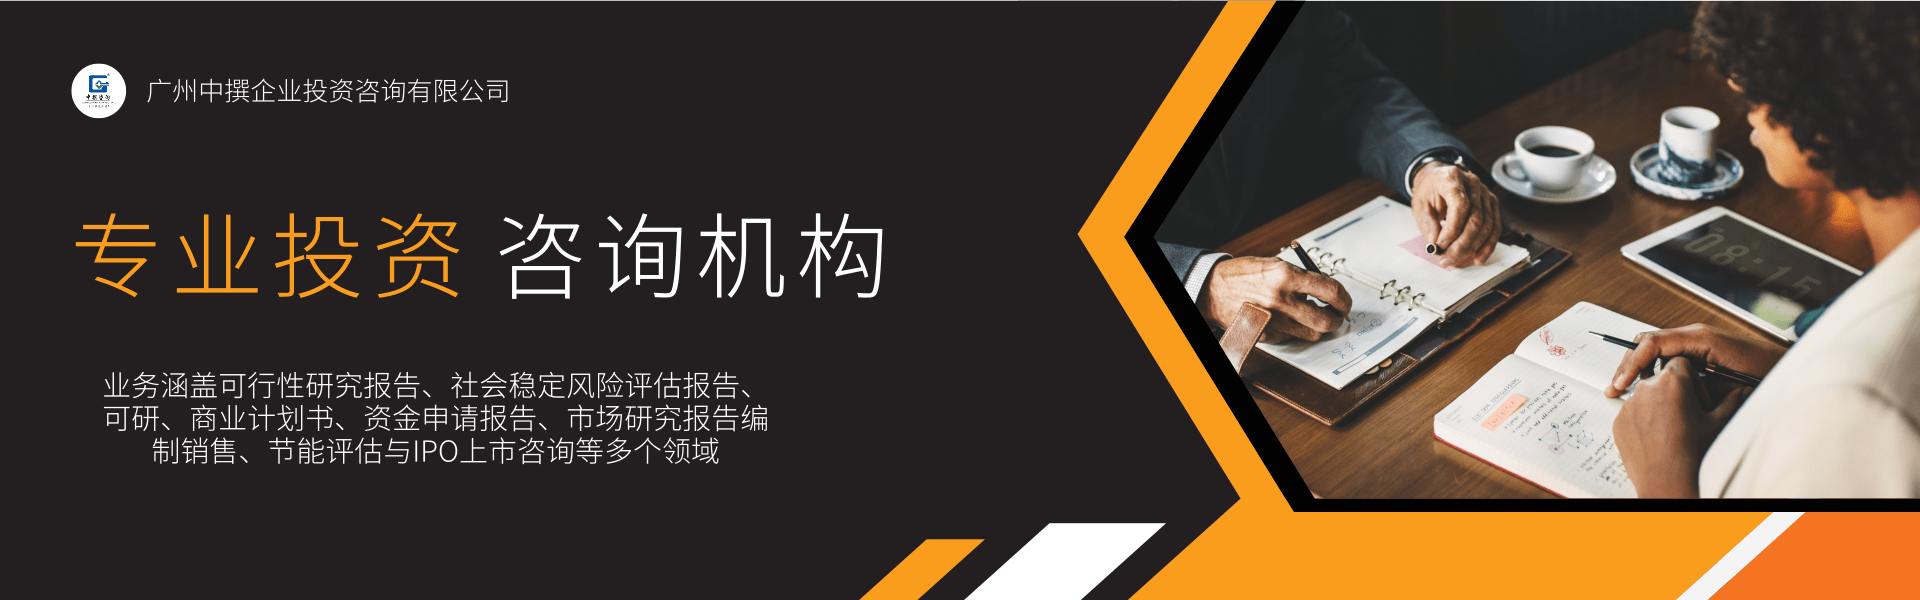 广告公司橙黑风格banner@凡科快图.png